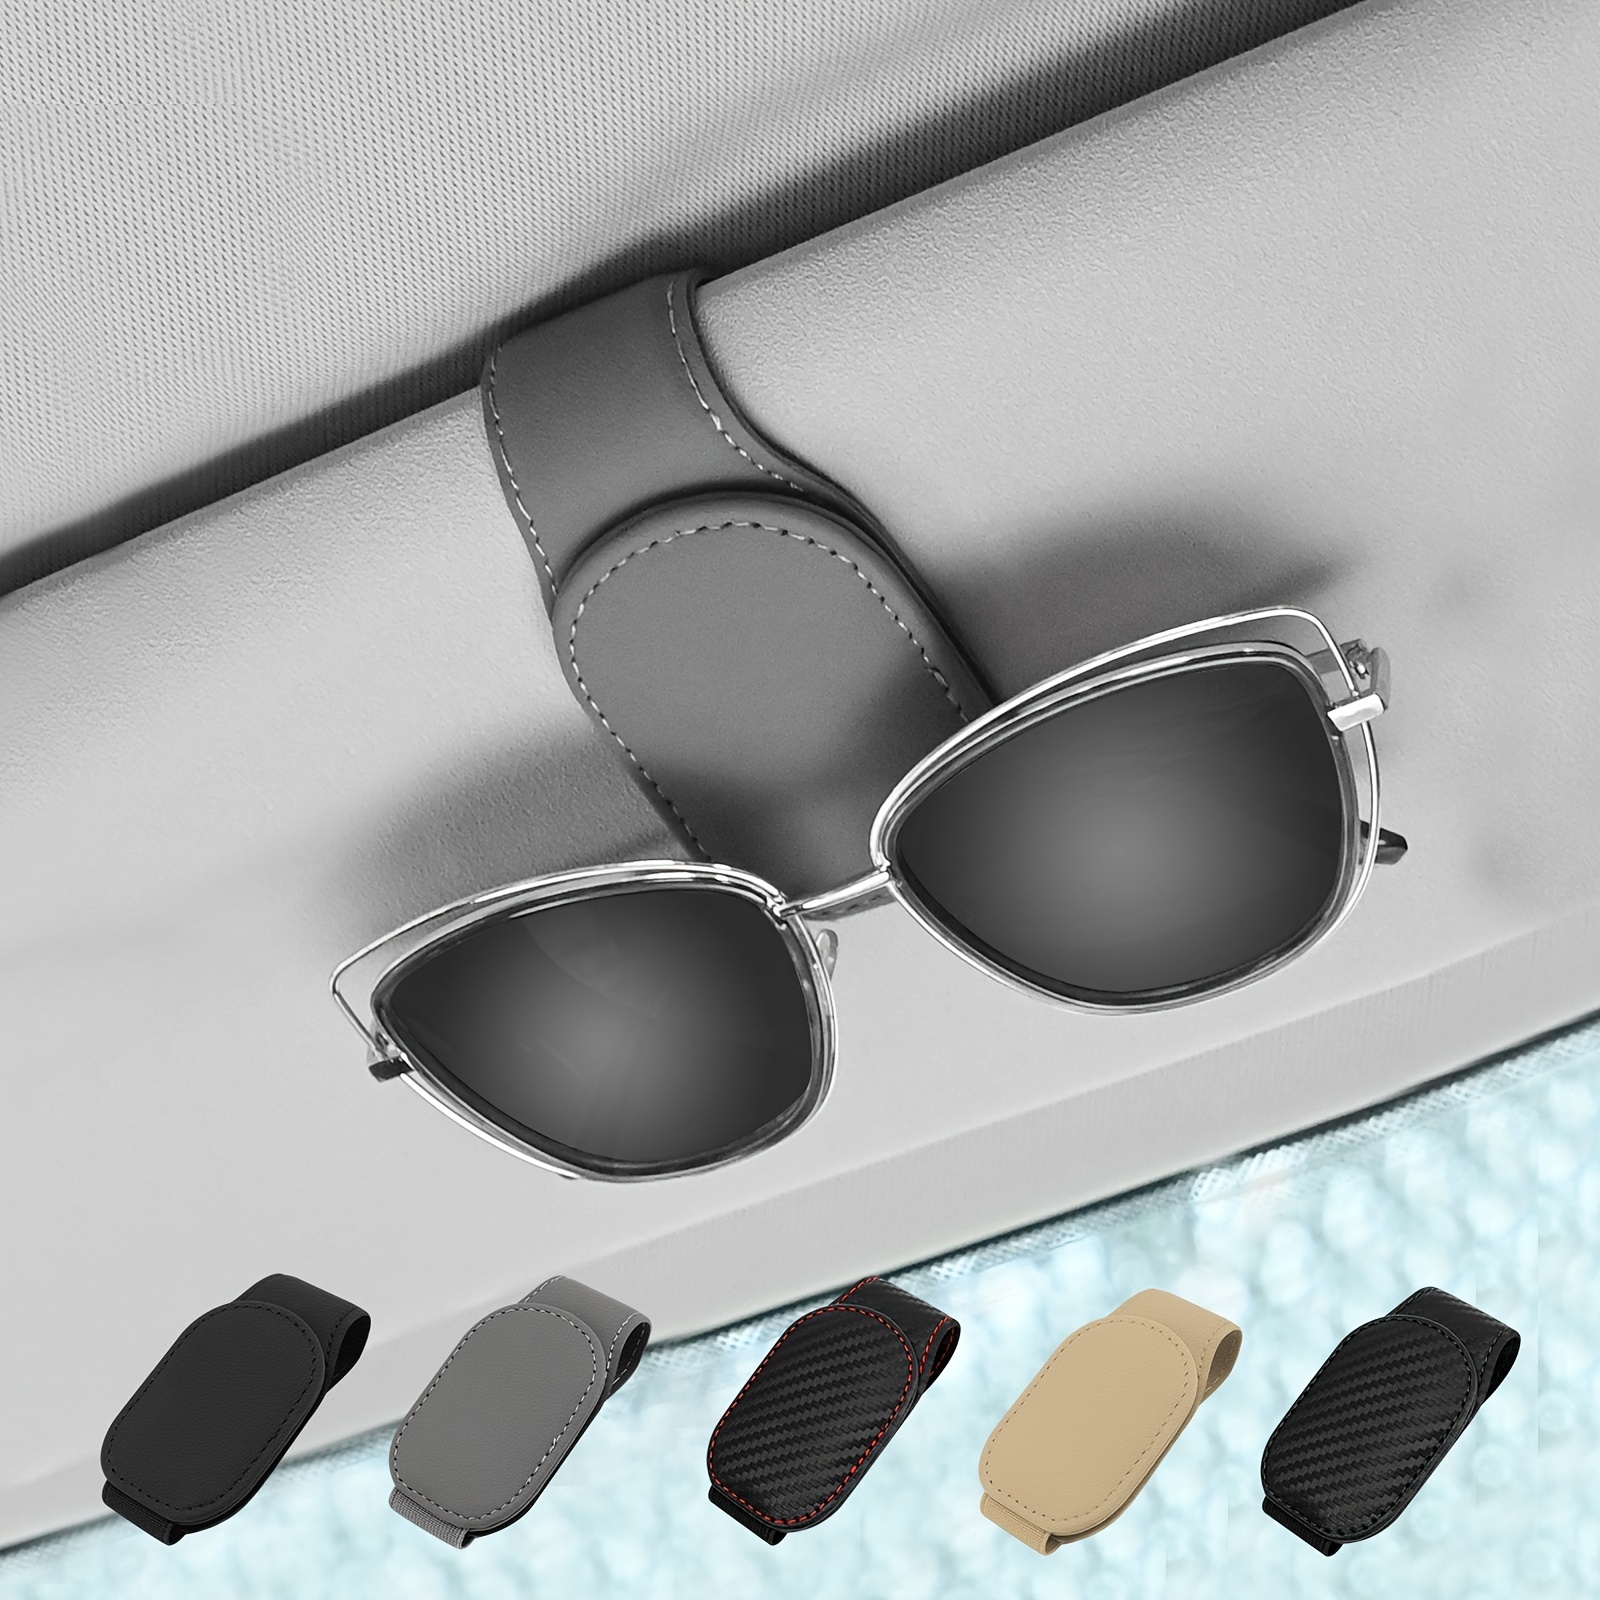 

Sunglasses Holders For Car Sun Visor, Magnetic Pu Leather Glasses Eyeglass Hanger Clip For Car, Ticket Card Clip Eyeglasses Mount